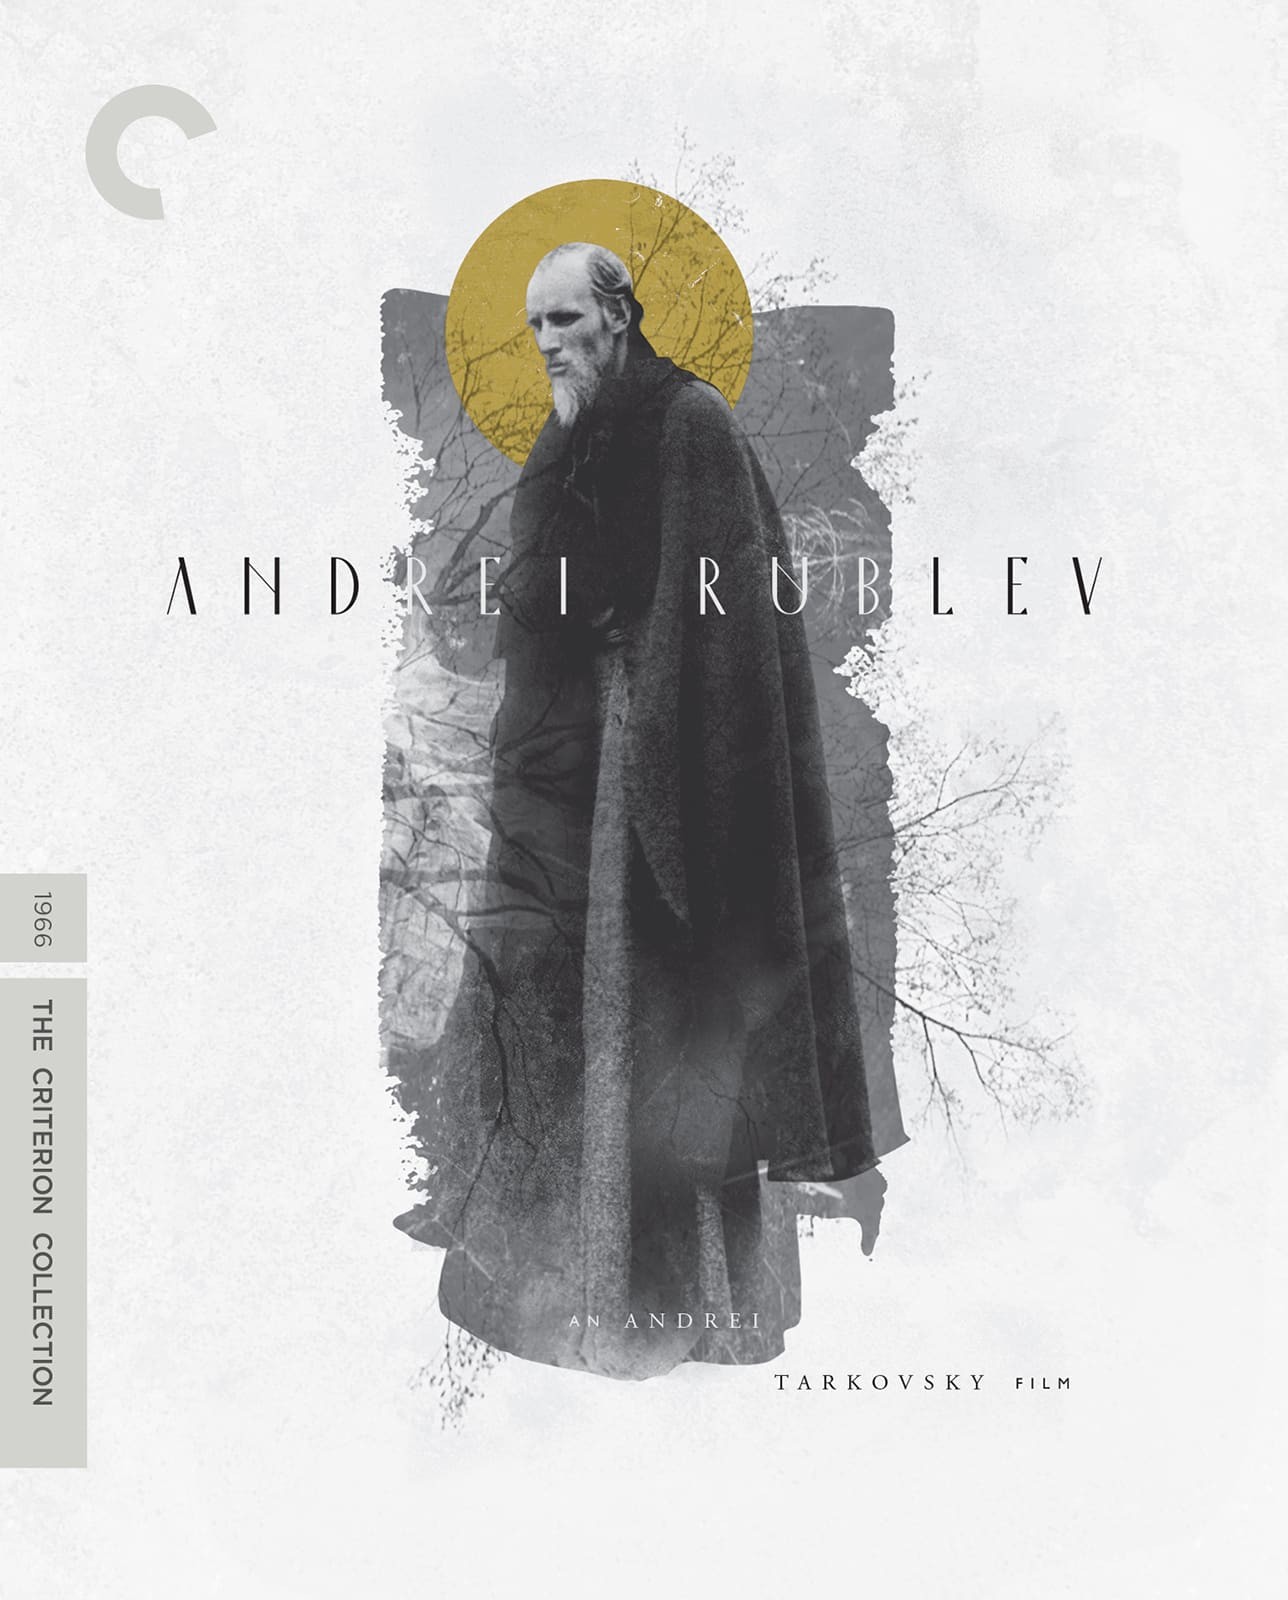 Andrei Rublev (1966) by Andrei Tarkovsky